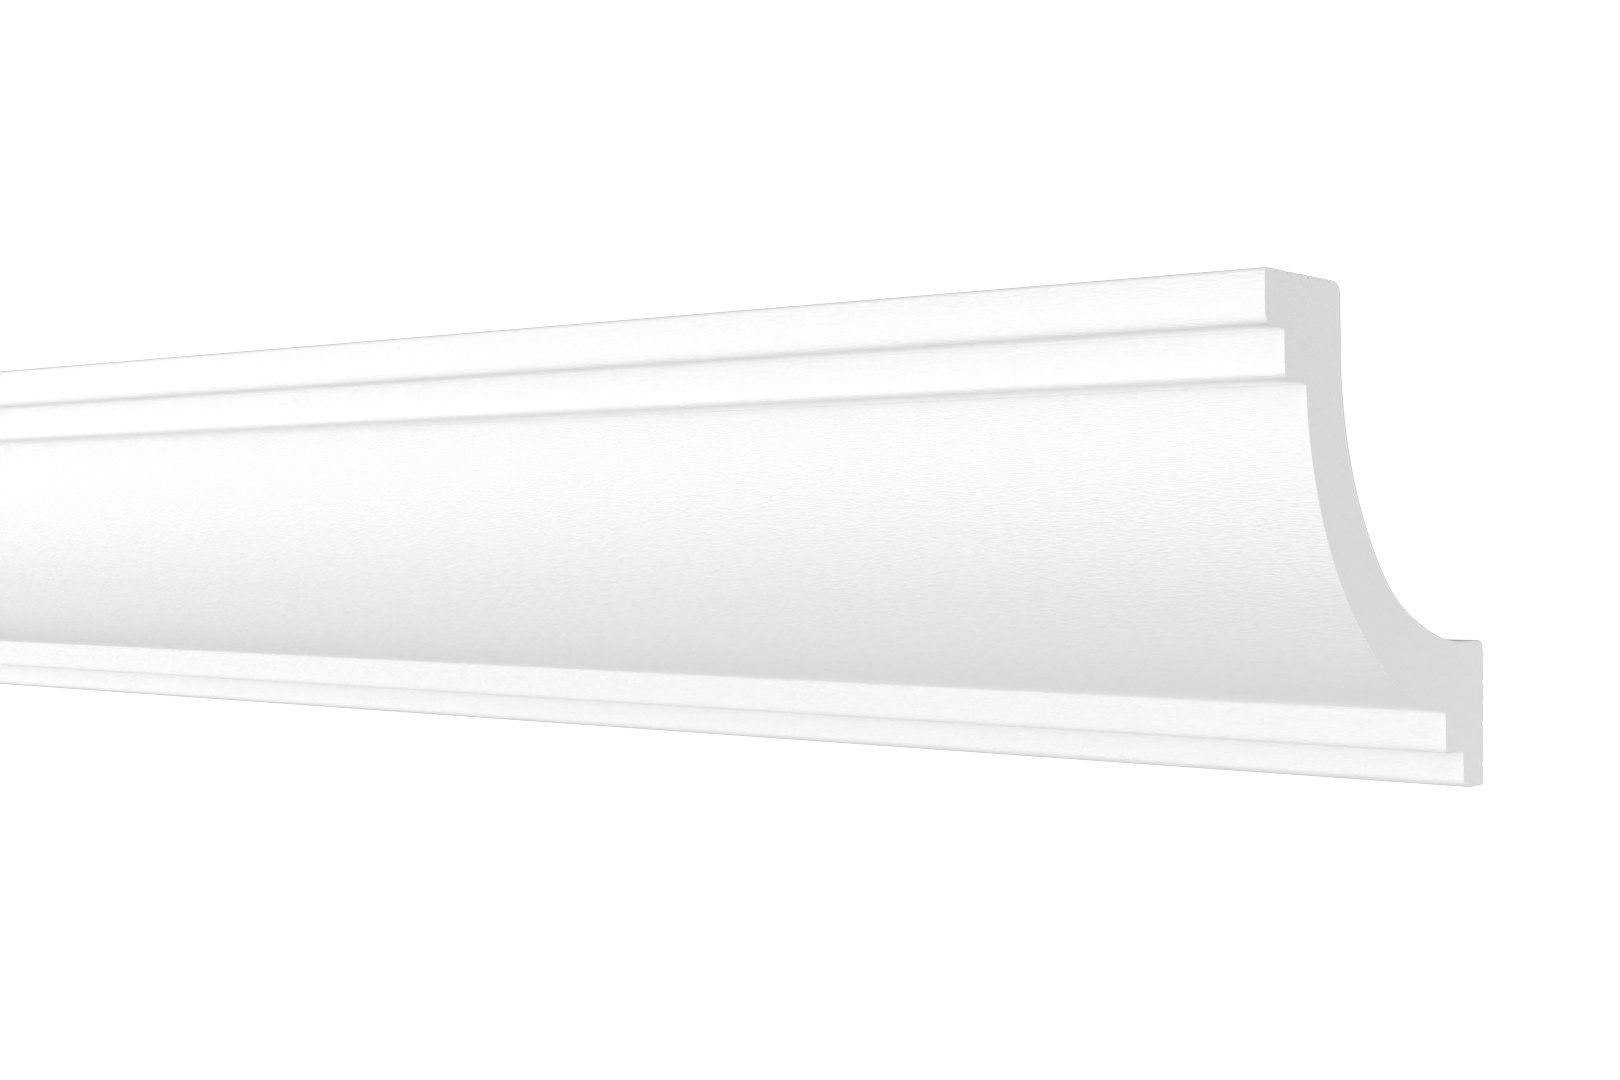 Styropor - weiß (20cm), E-36 Stuckleiste Deckenabschlussleisten design E-36, E-Leisten E-36) Deckenleisten / Musterstück 56x56mm marbet (Musterstück - XPS